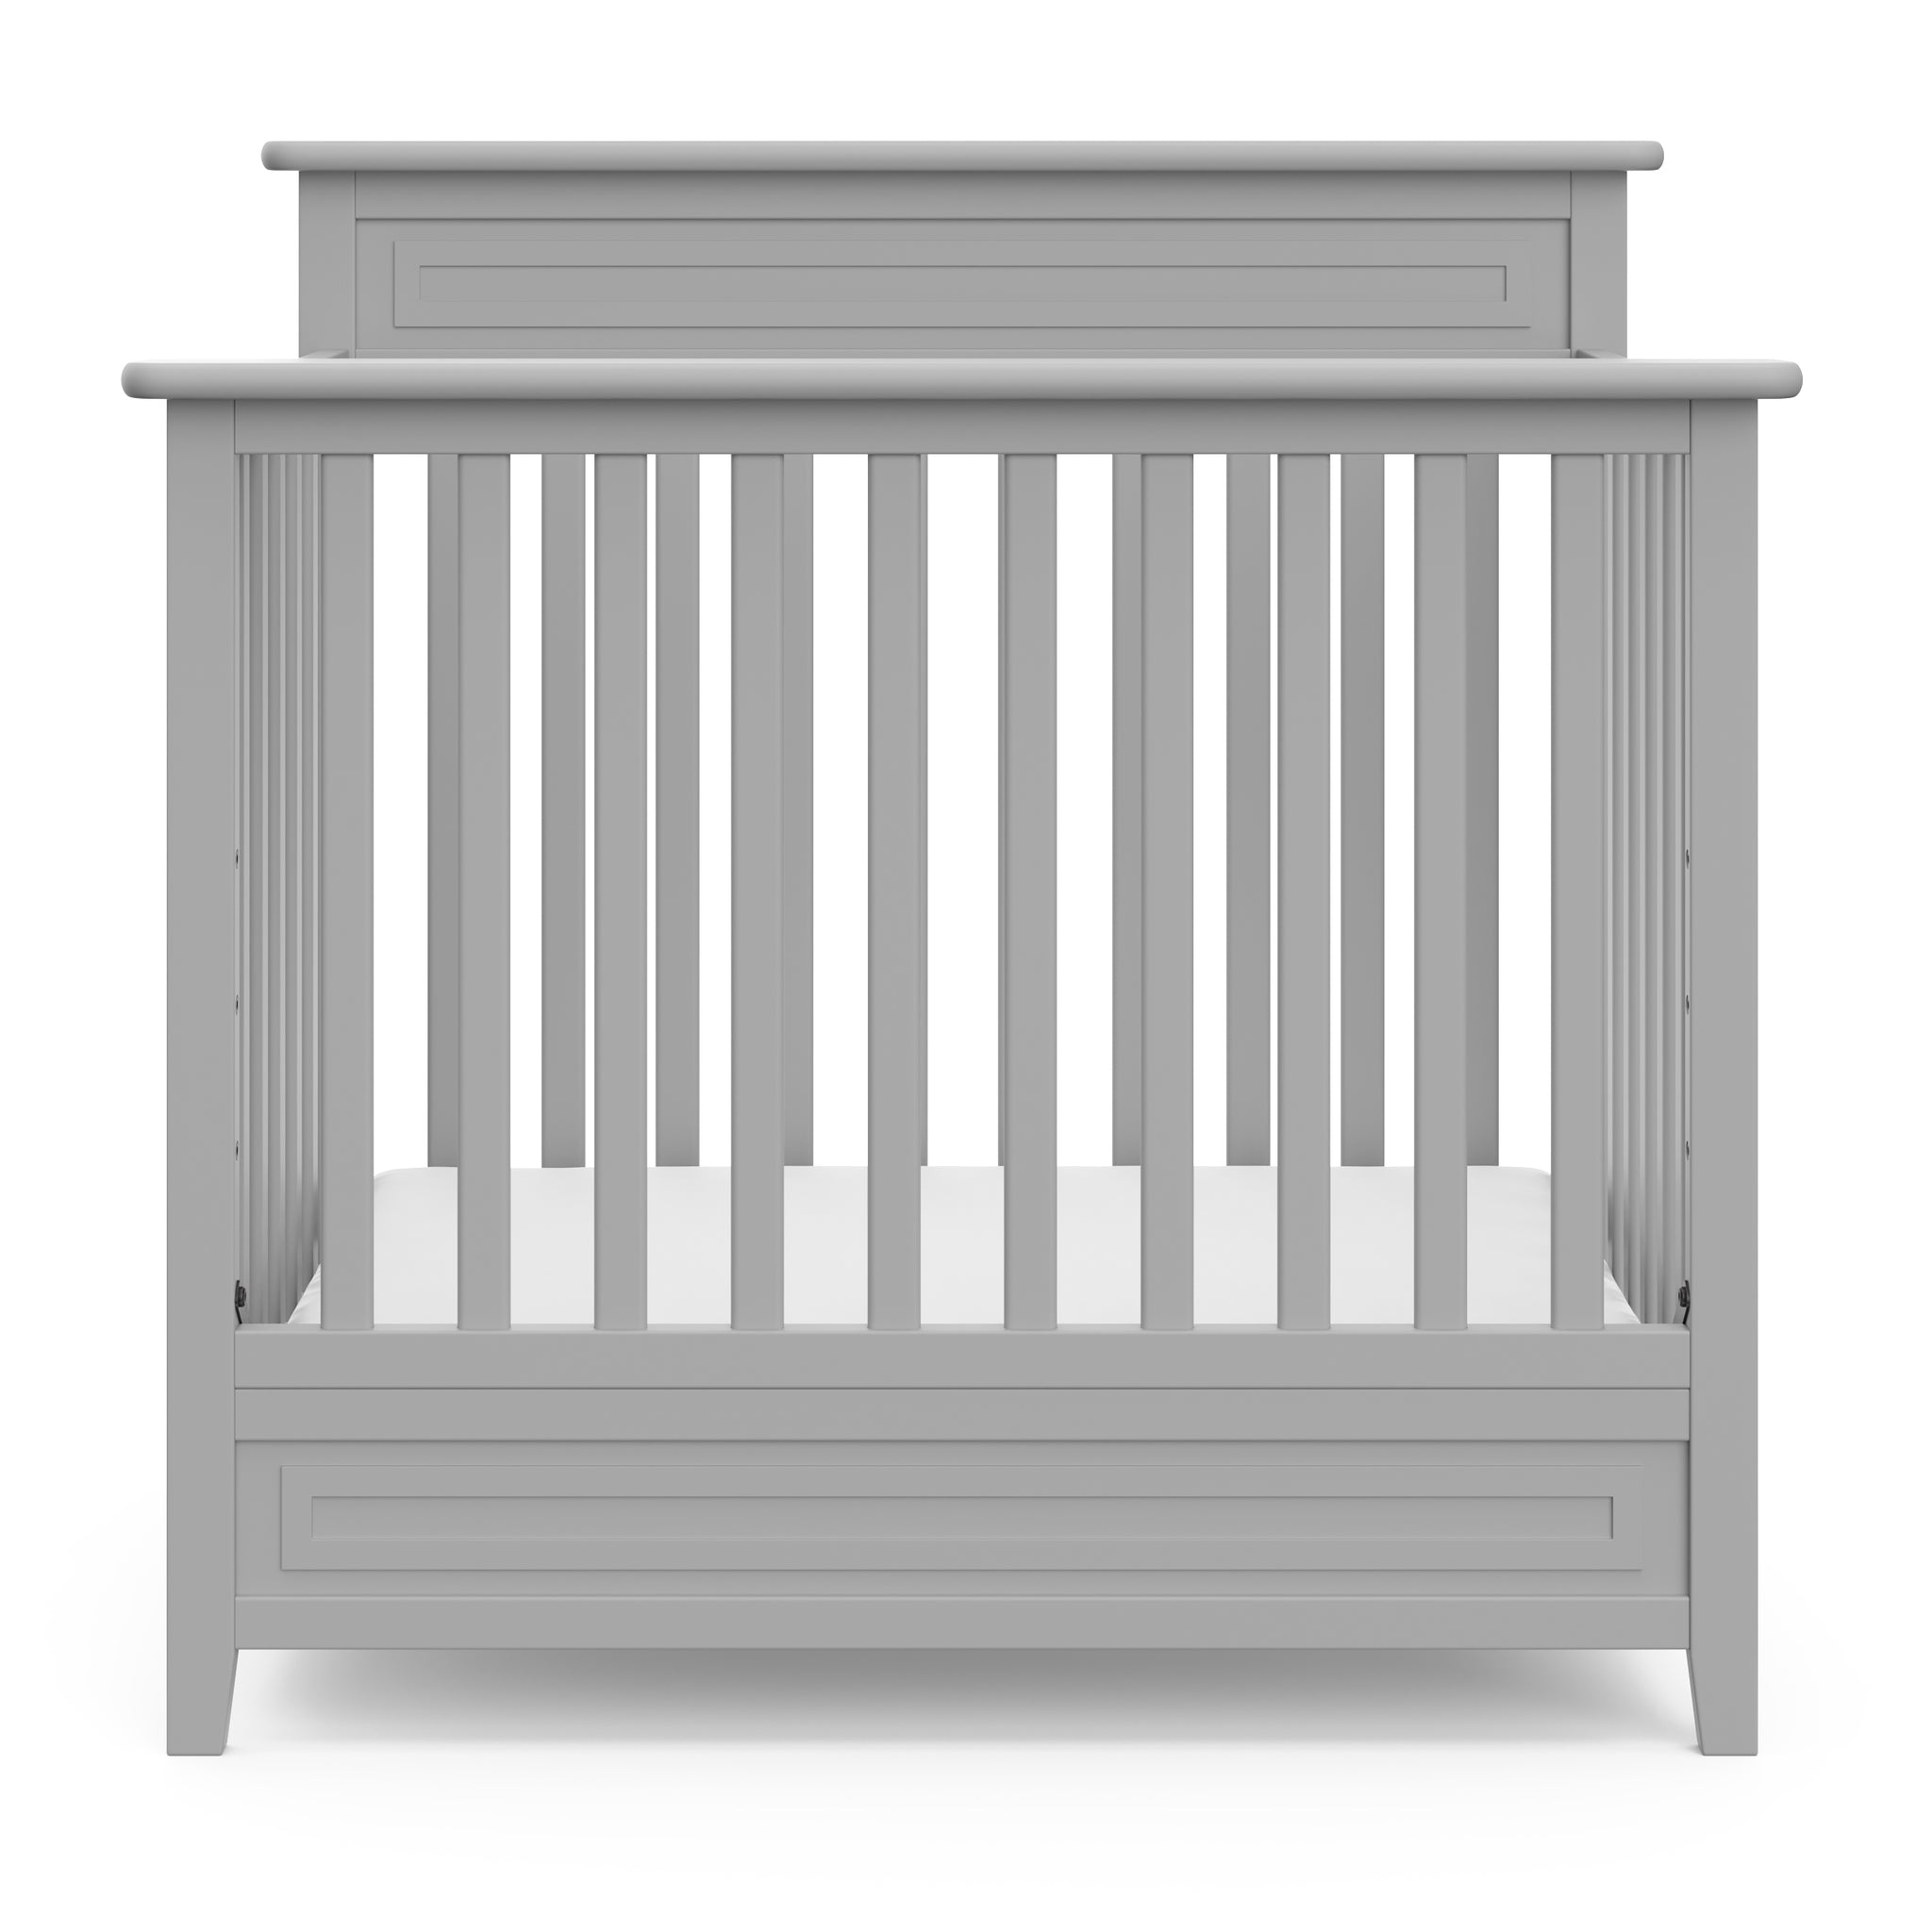 pebble gray crib